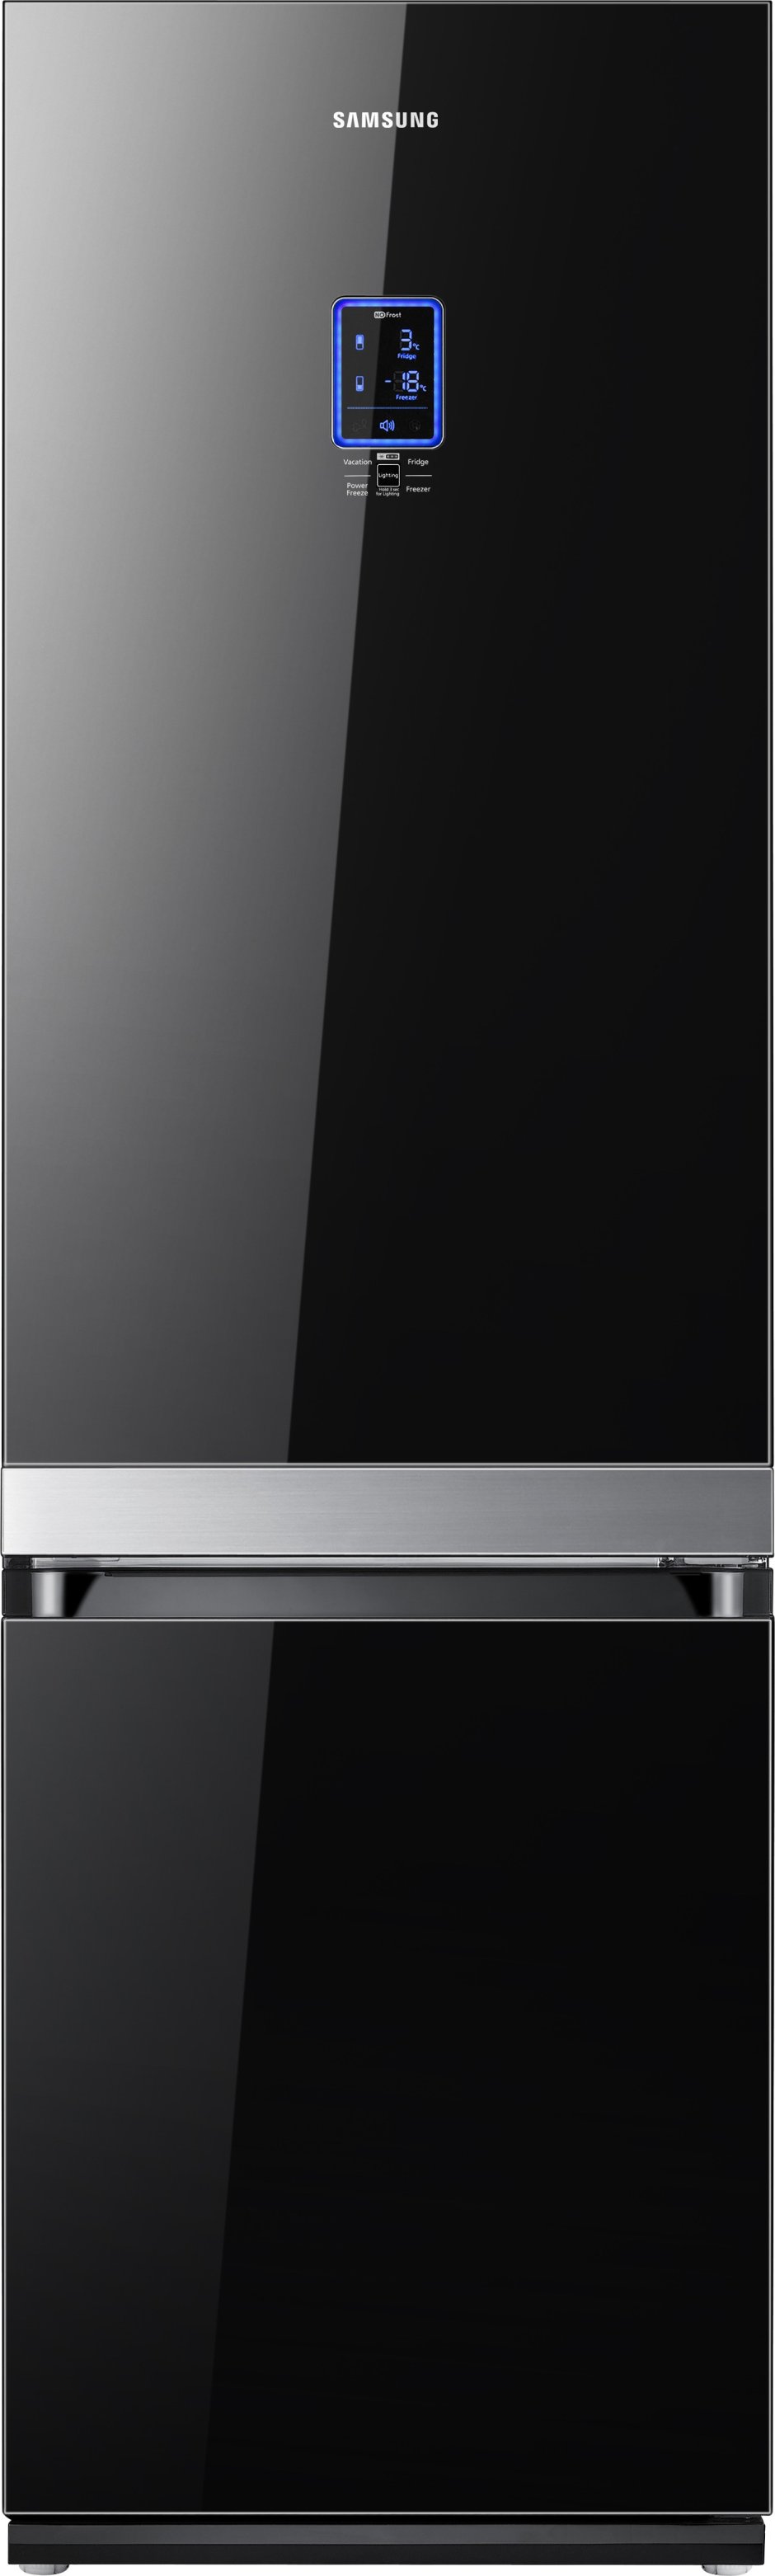 Rl55vtebg Samsung холодильник белый